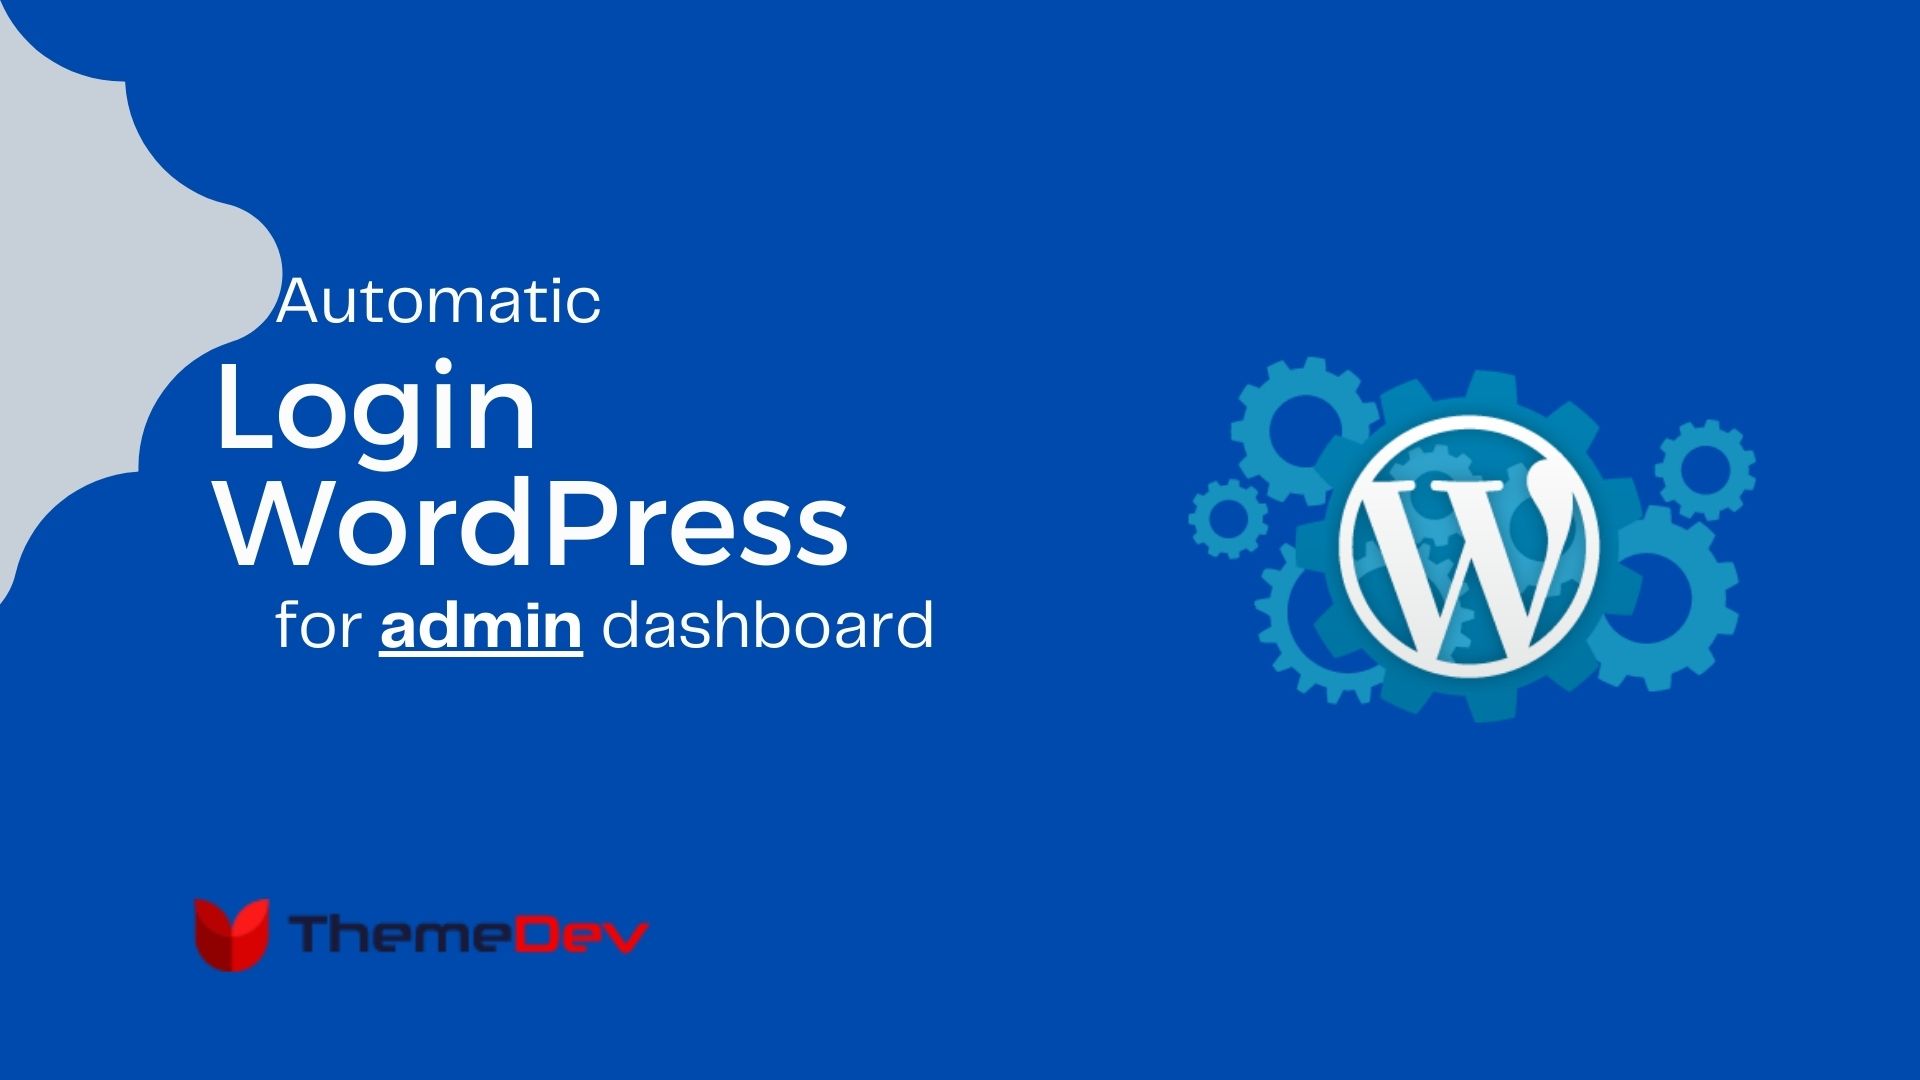 Automatic login to WordPress Admin